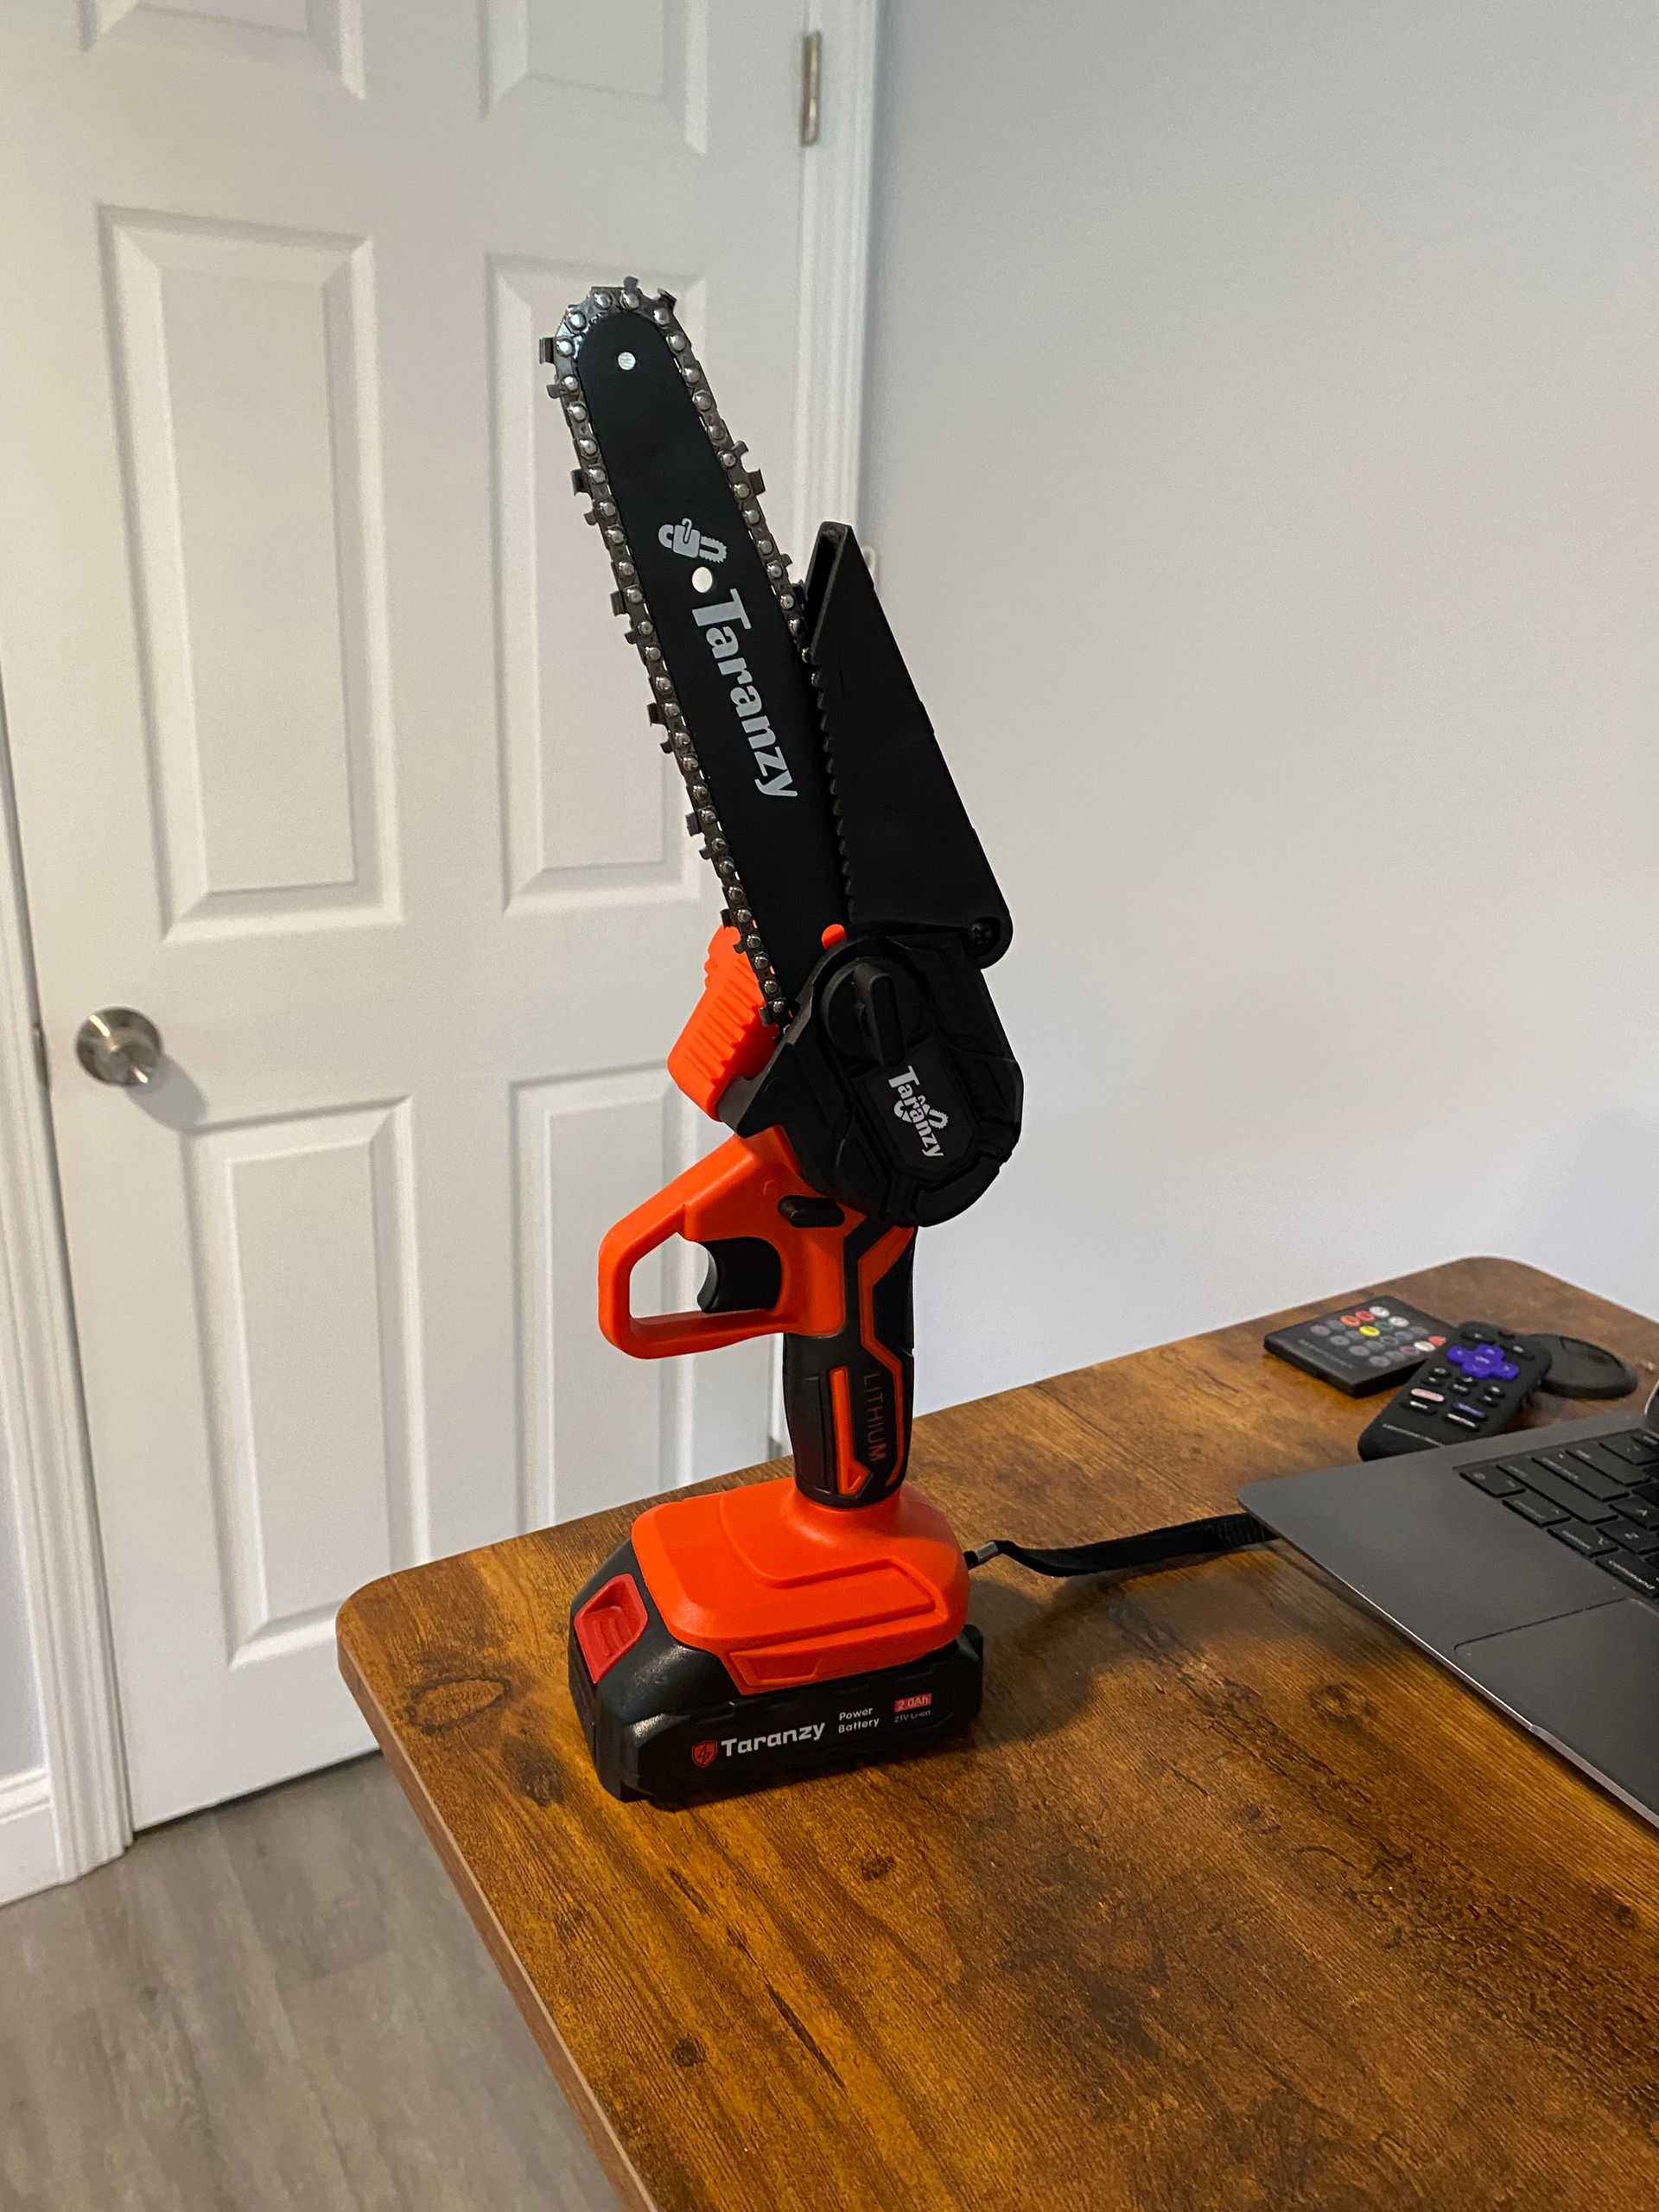 taranzy mini chainsaw on a desk